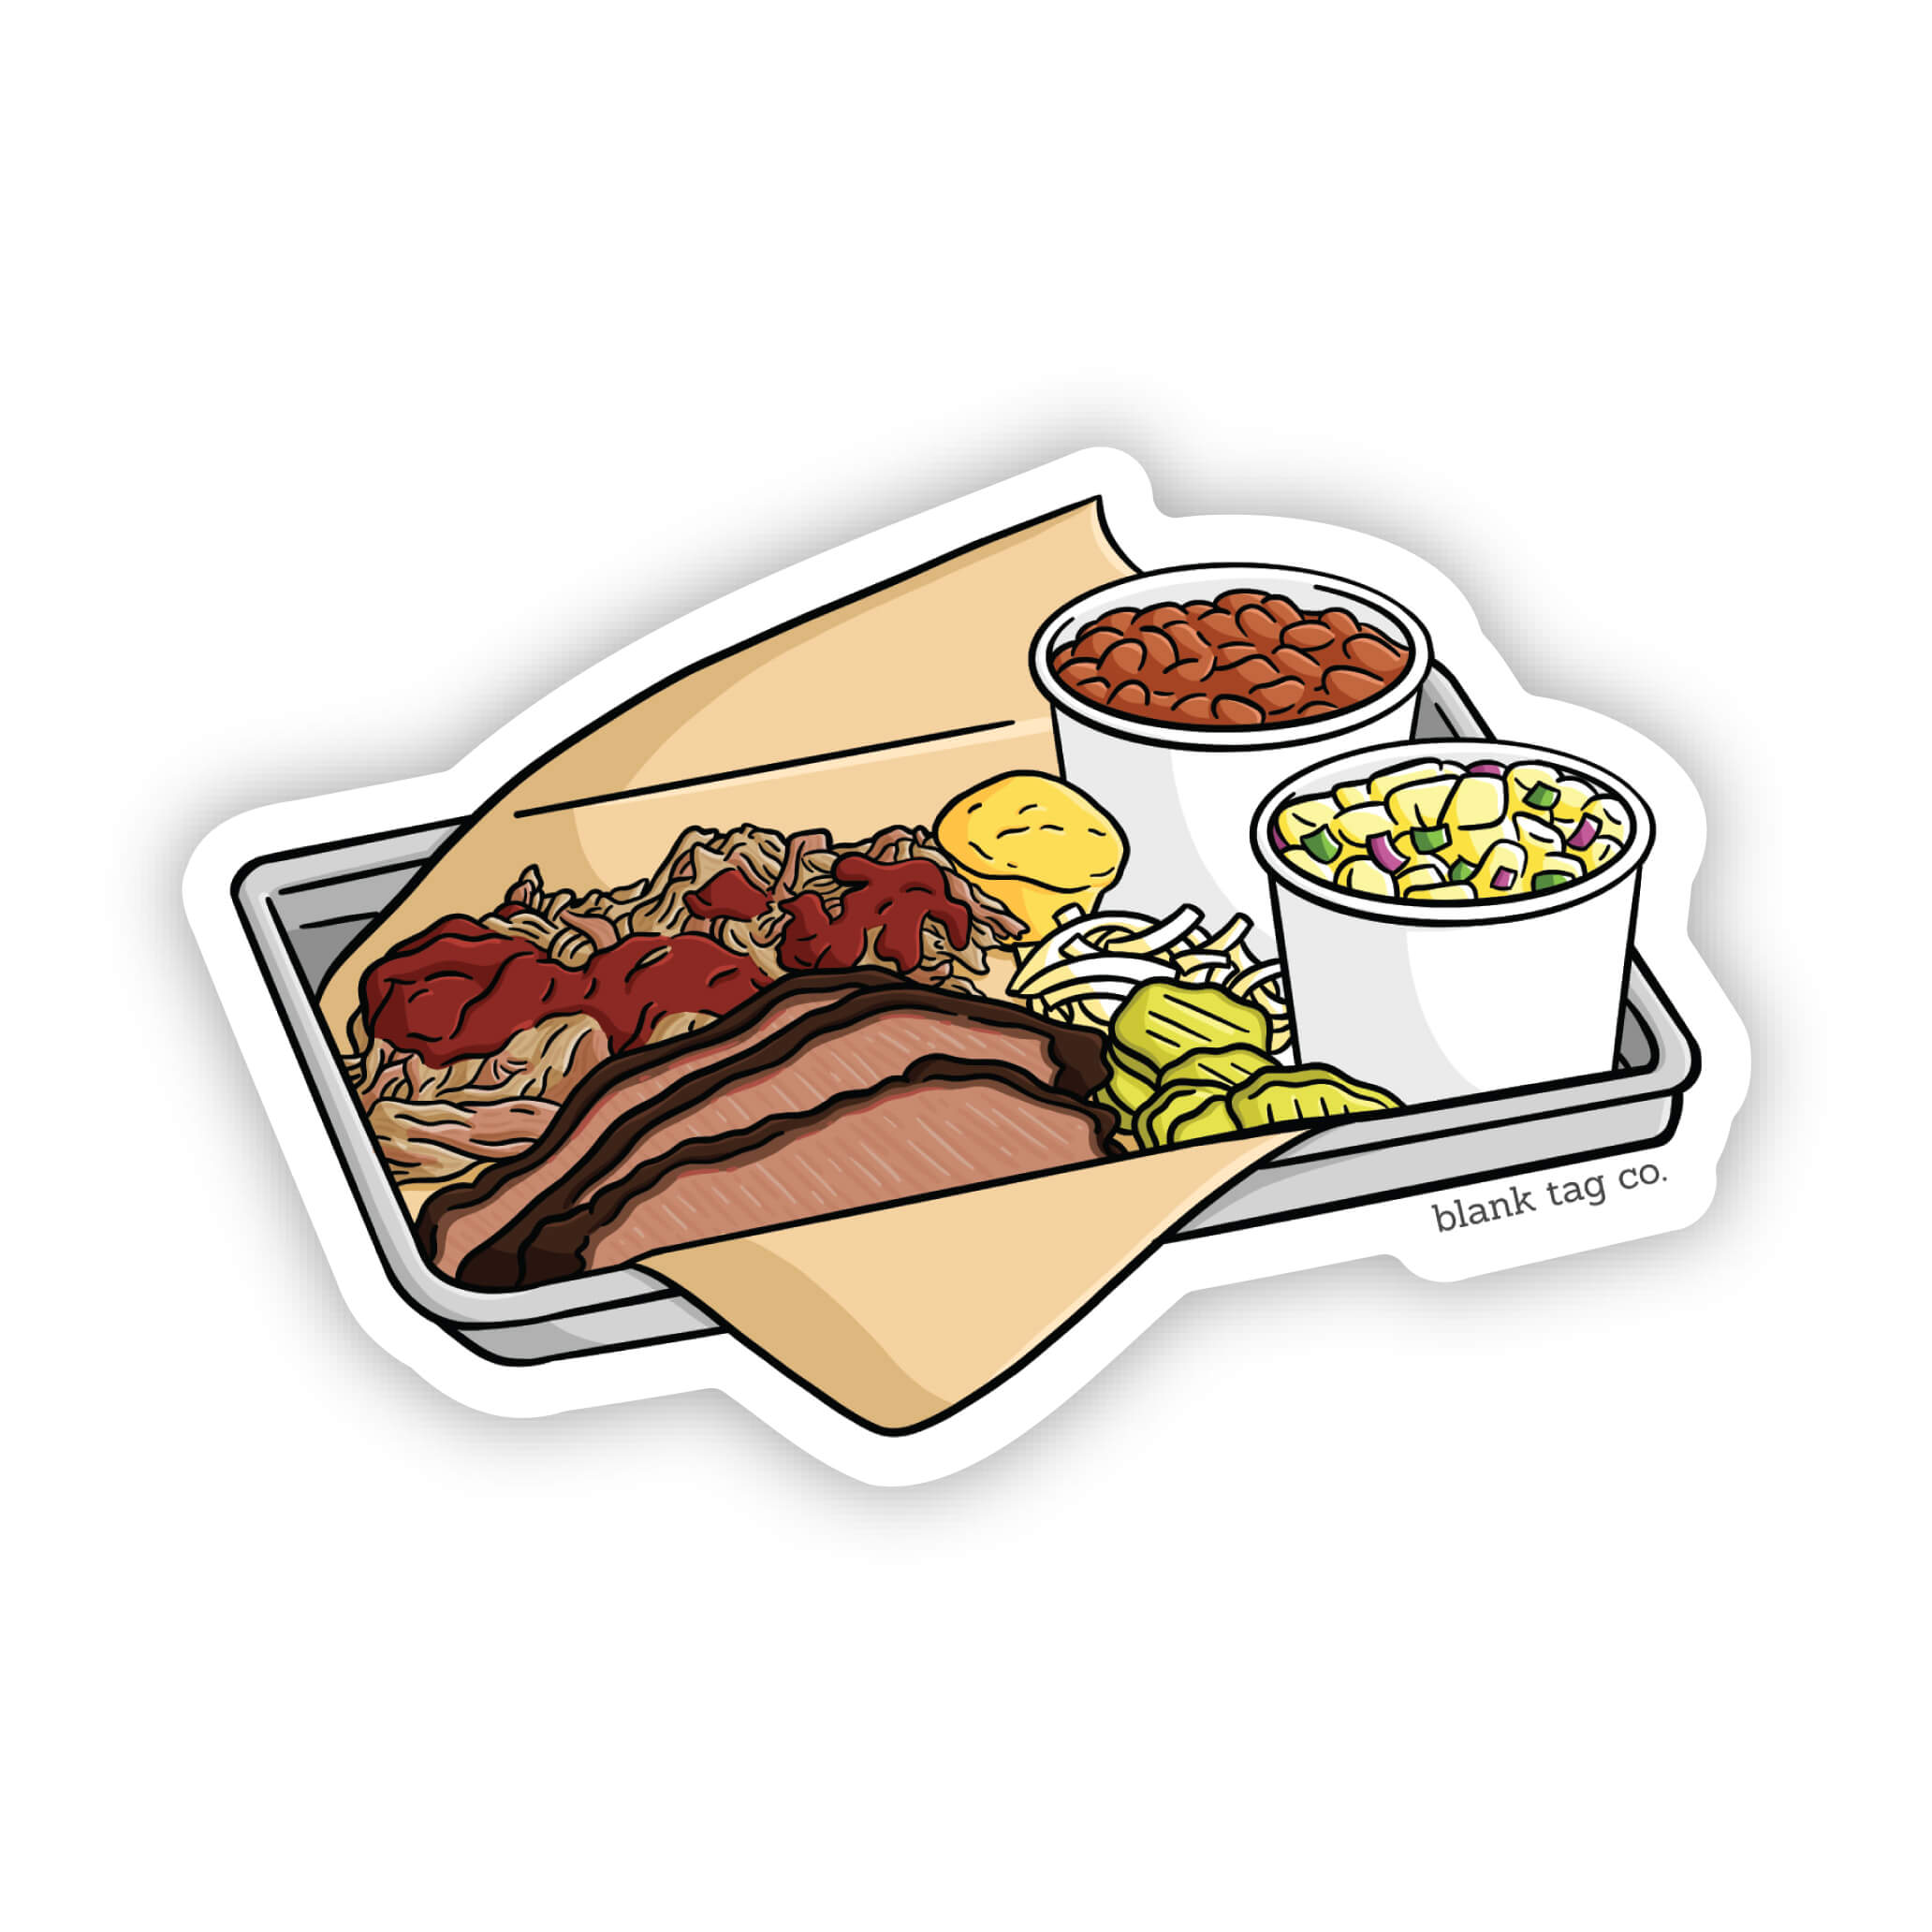 The BBQ Plate Sticker